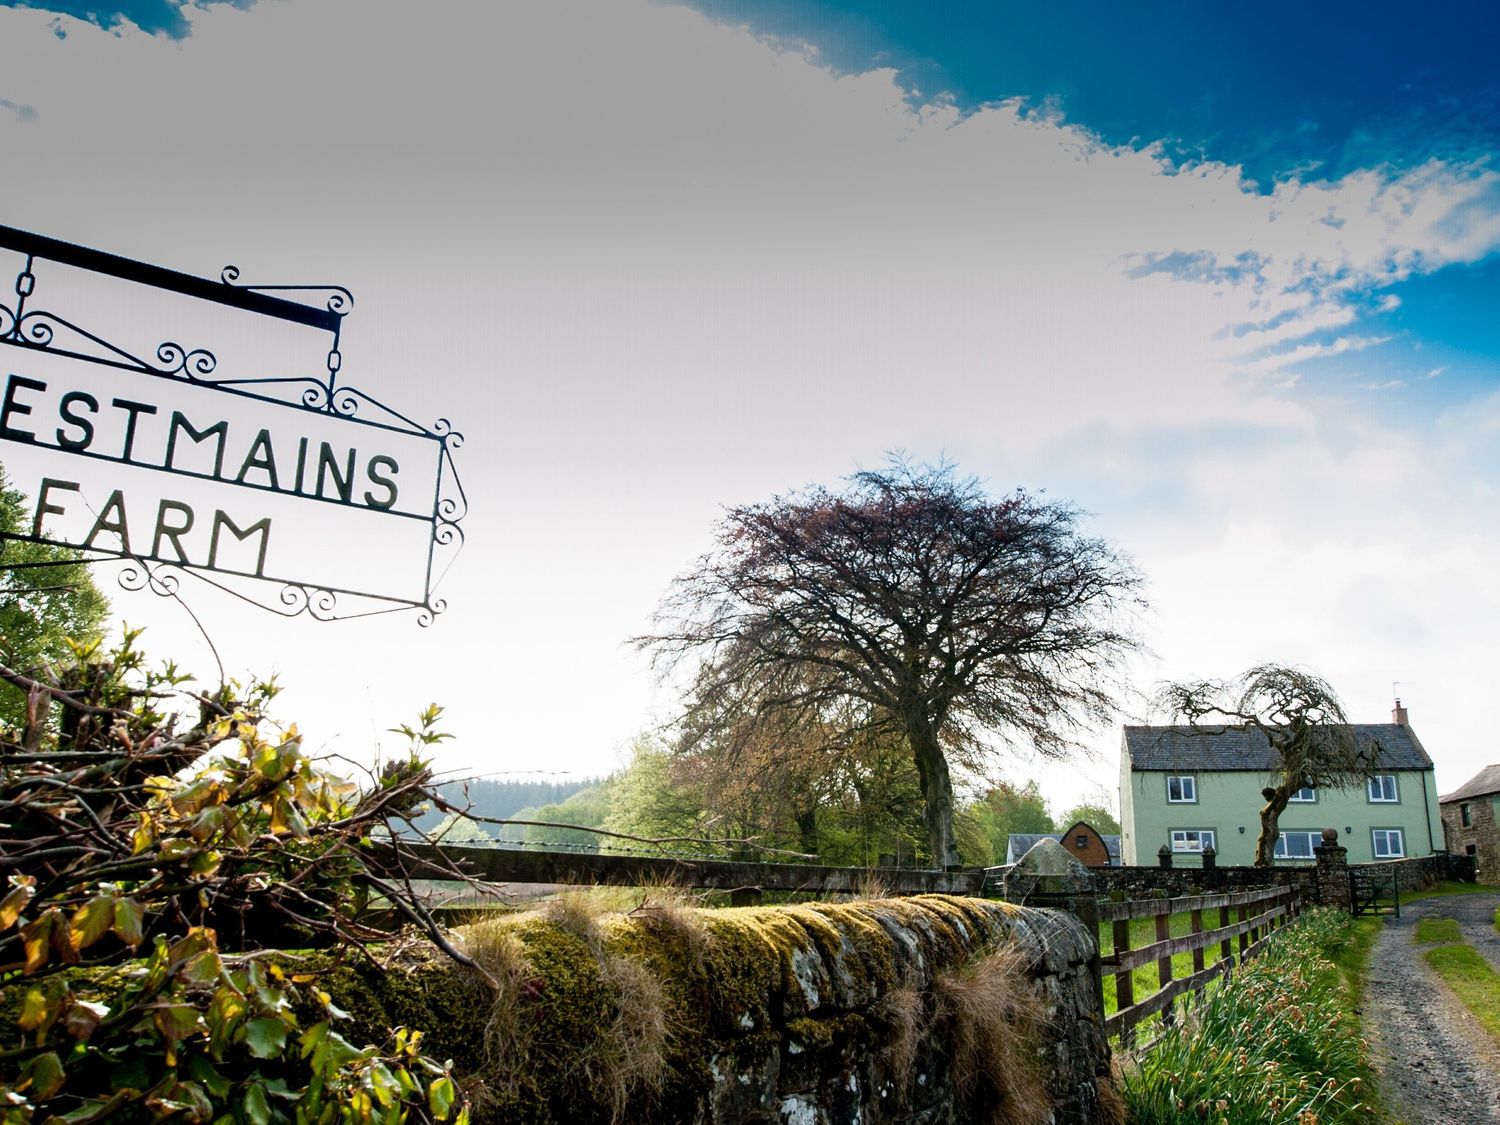 Westmains Farm, Lake District